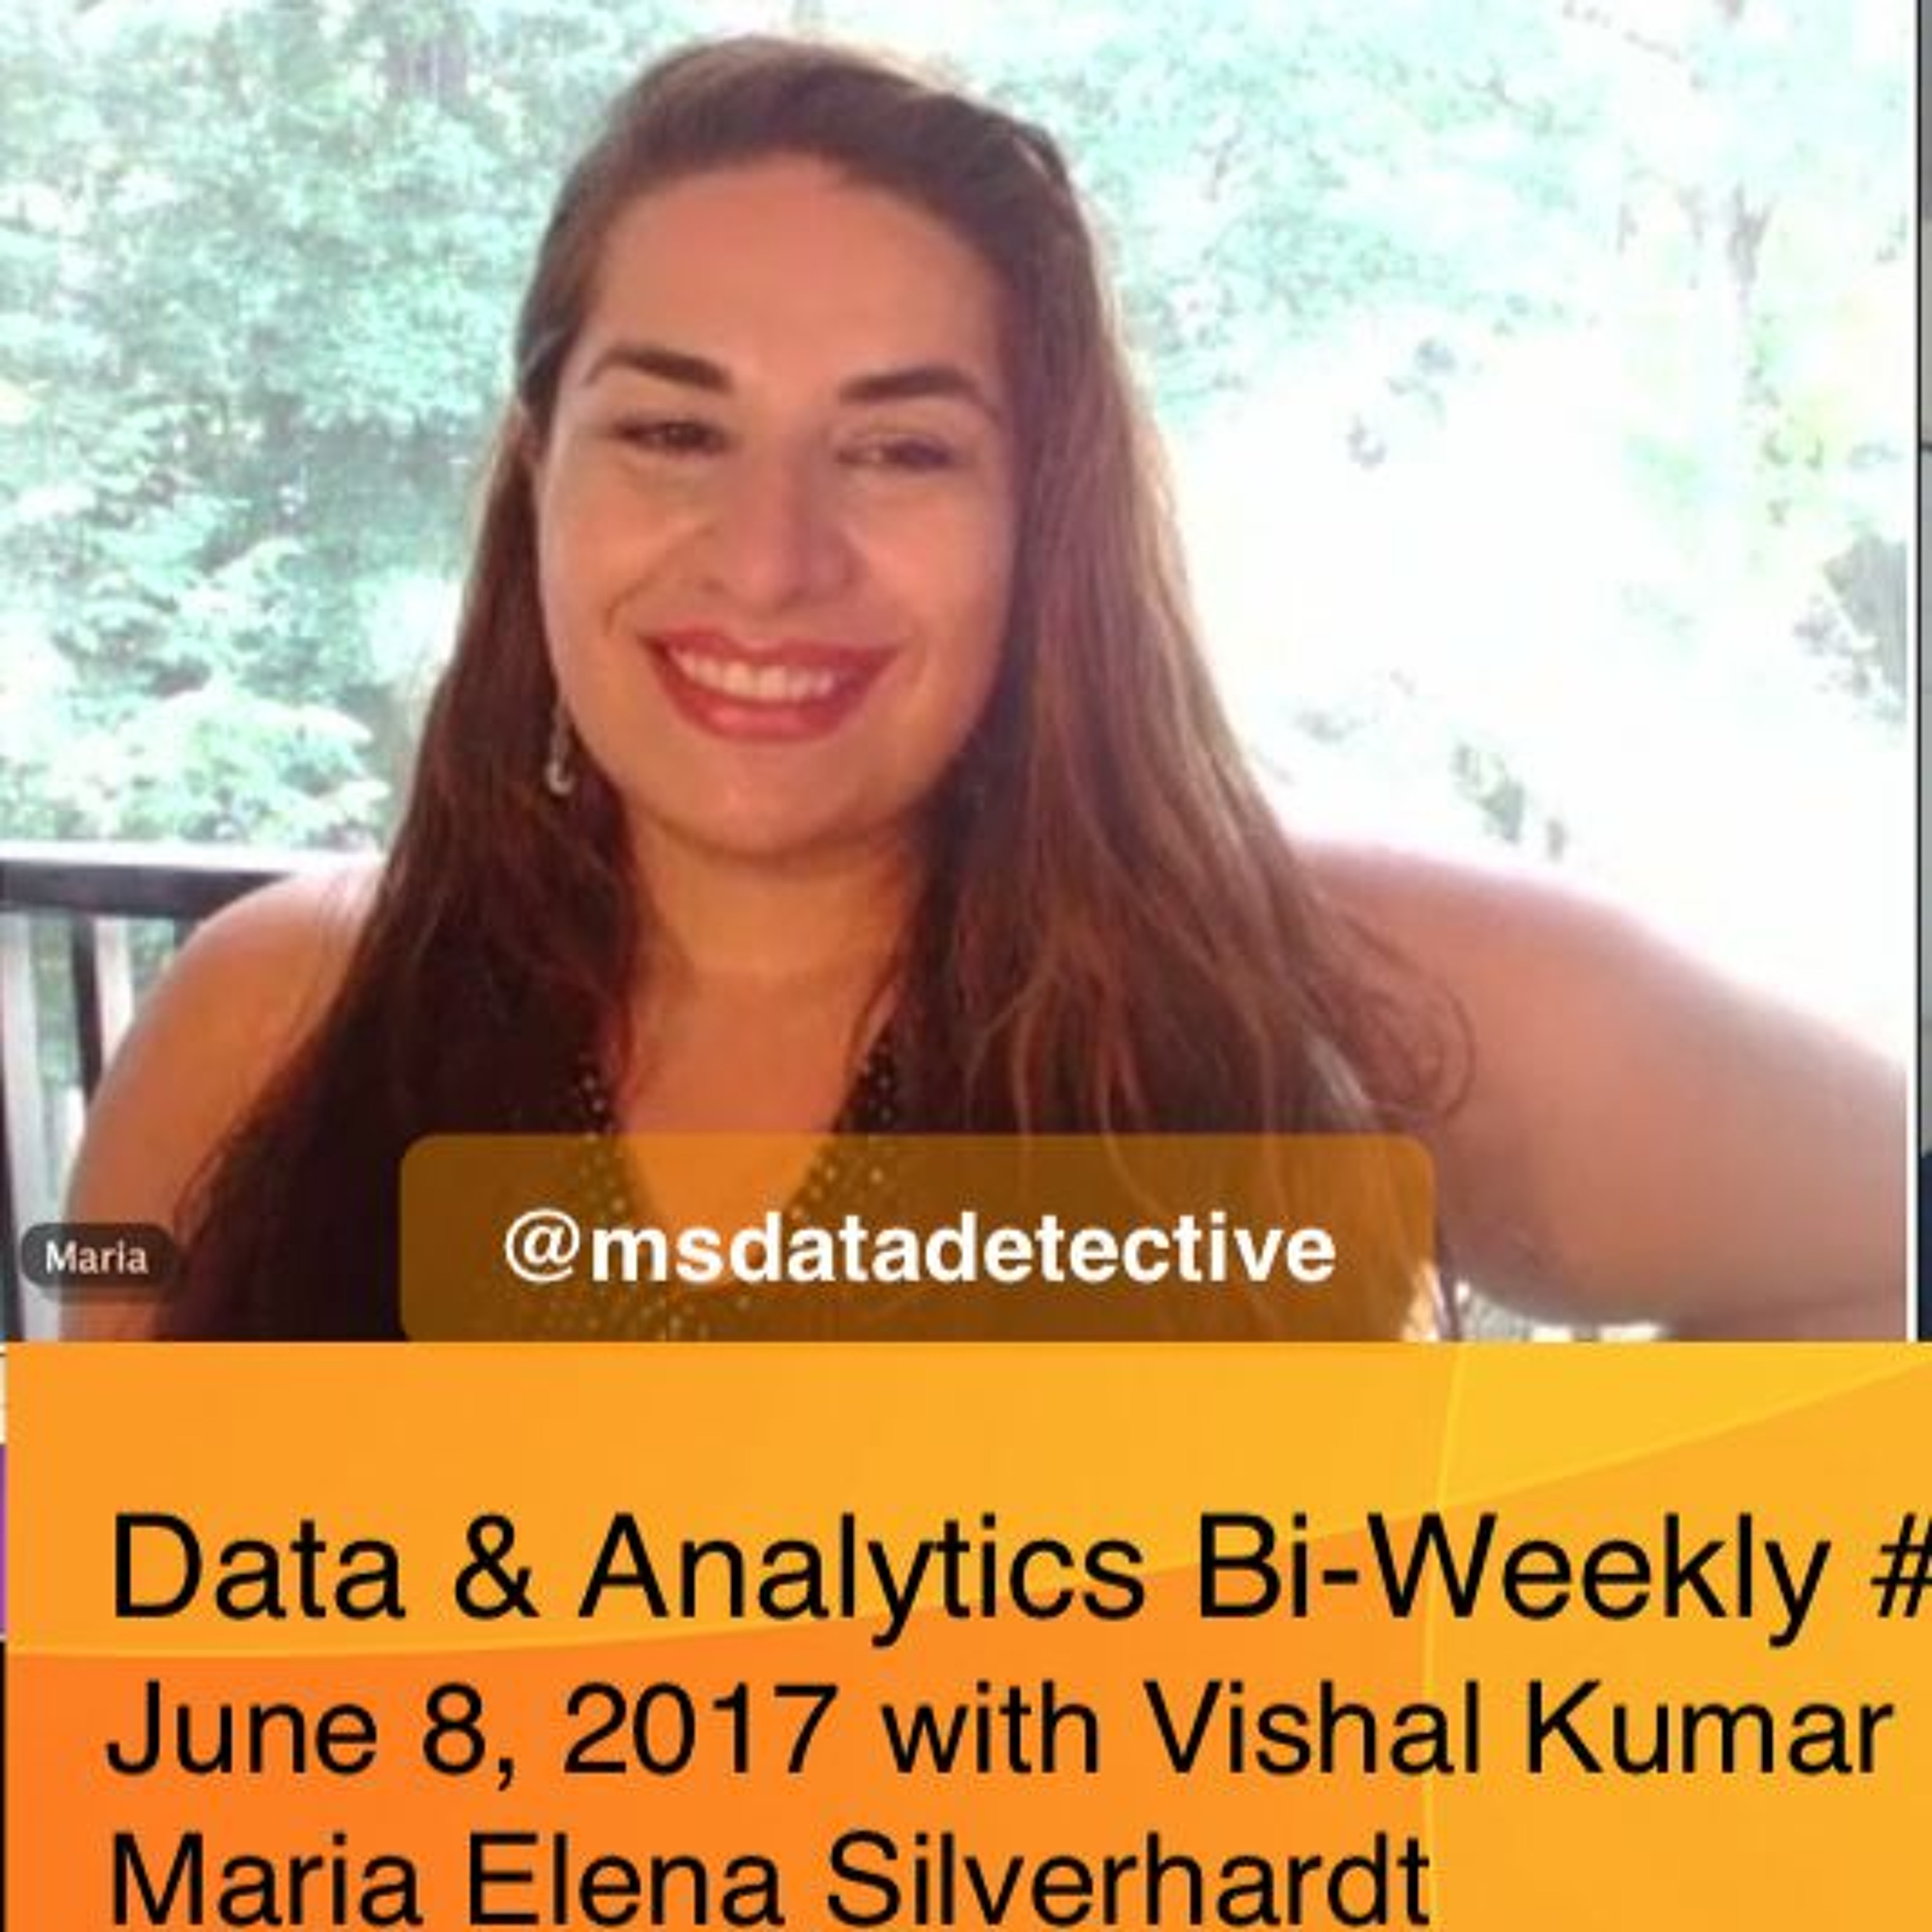 Data & Analytics Bi-Weekly Newsletter Cast June 8, 2017